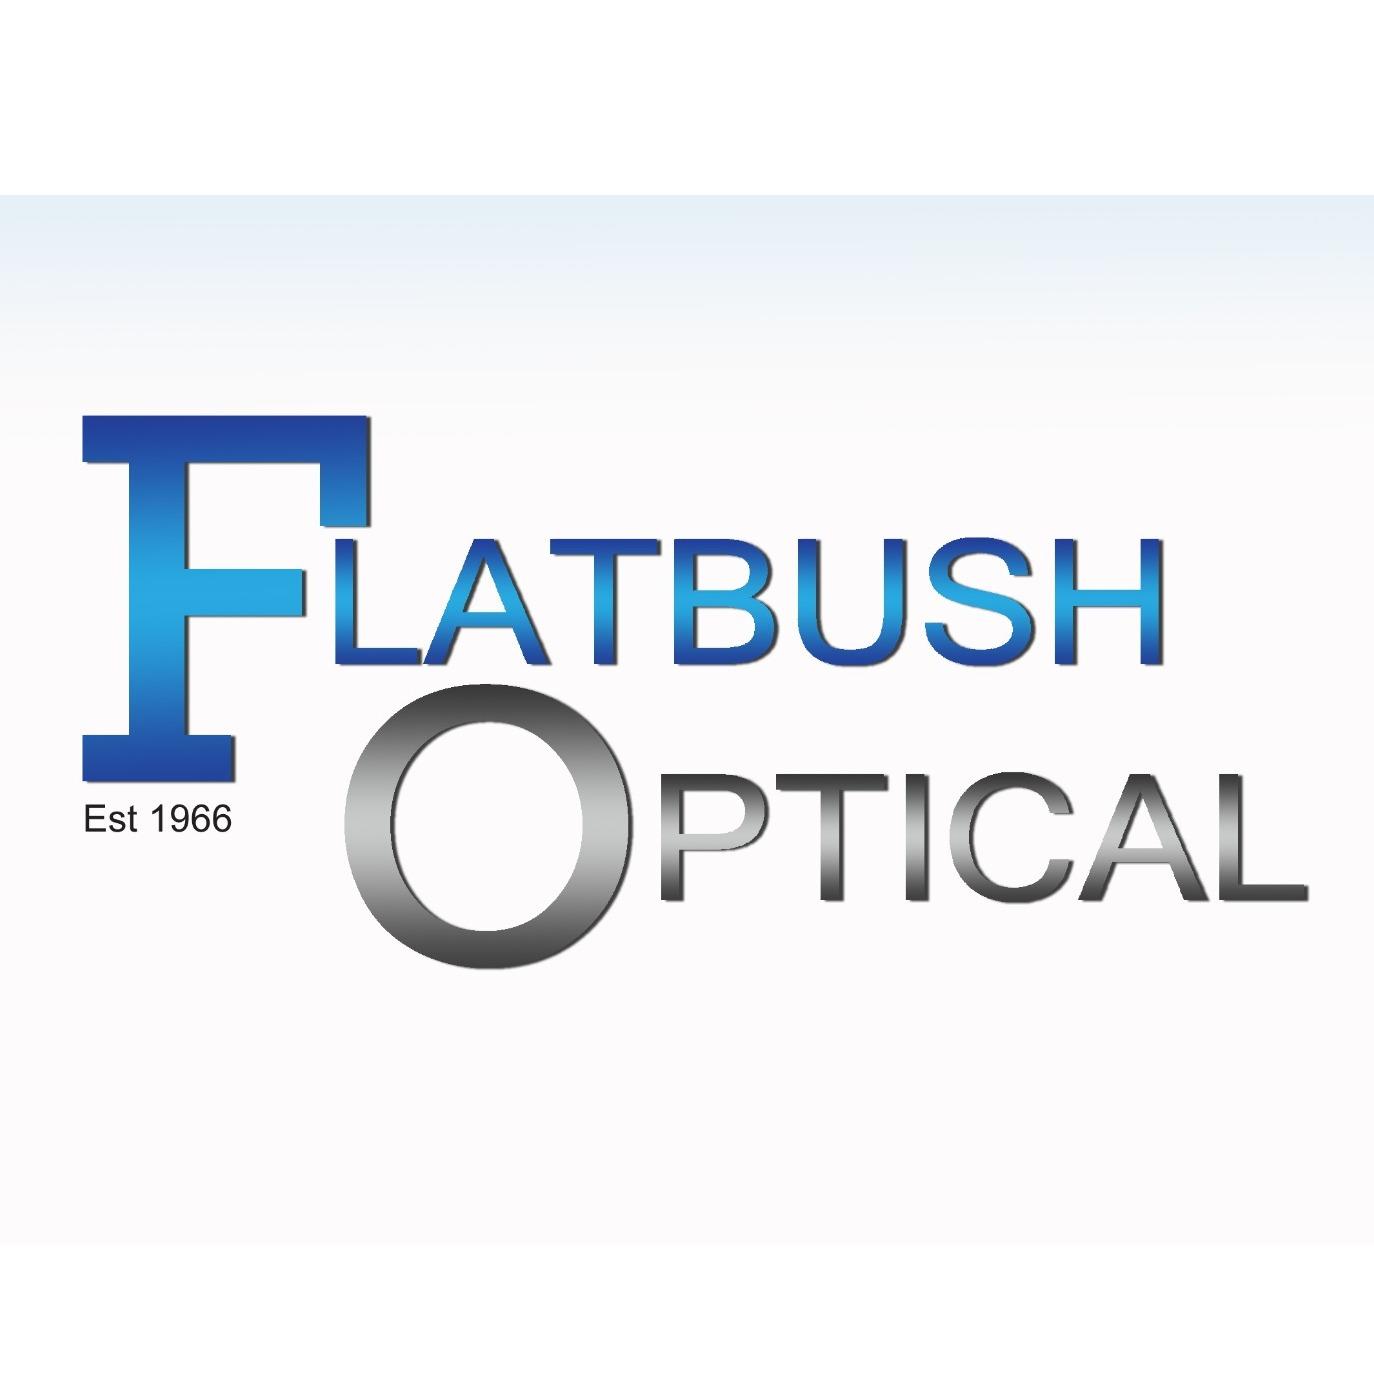 Flatbush Optical Brooklyn Photo